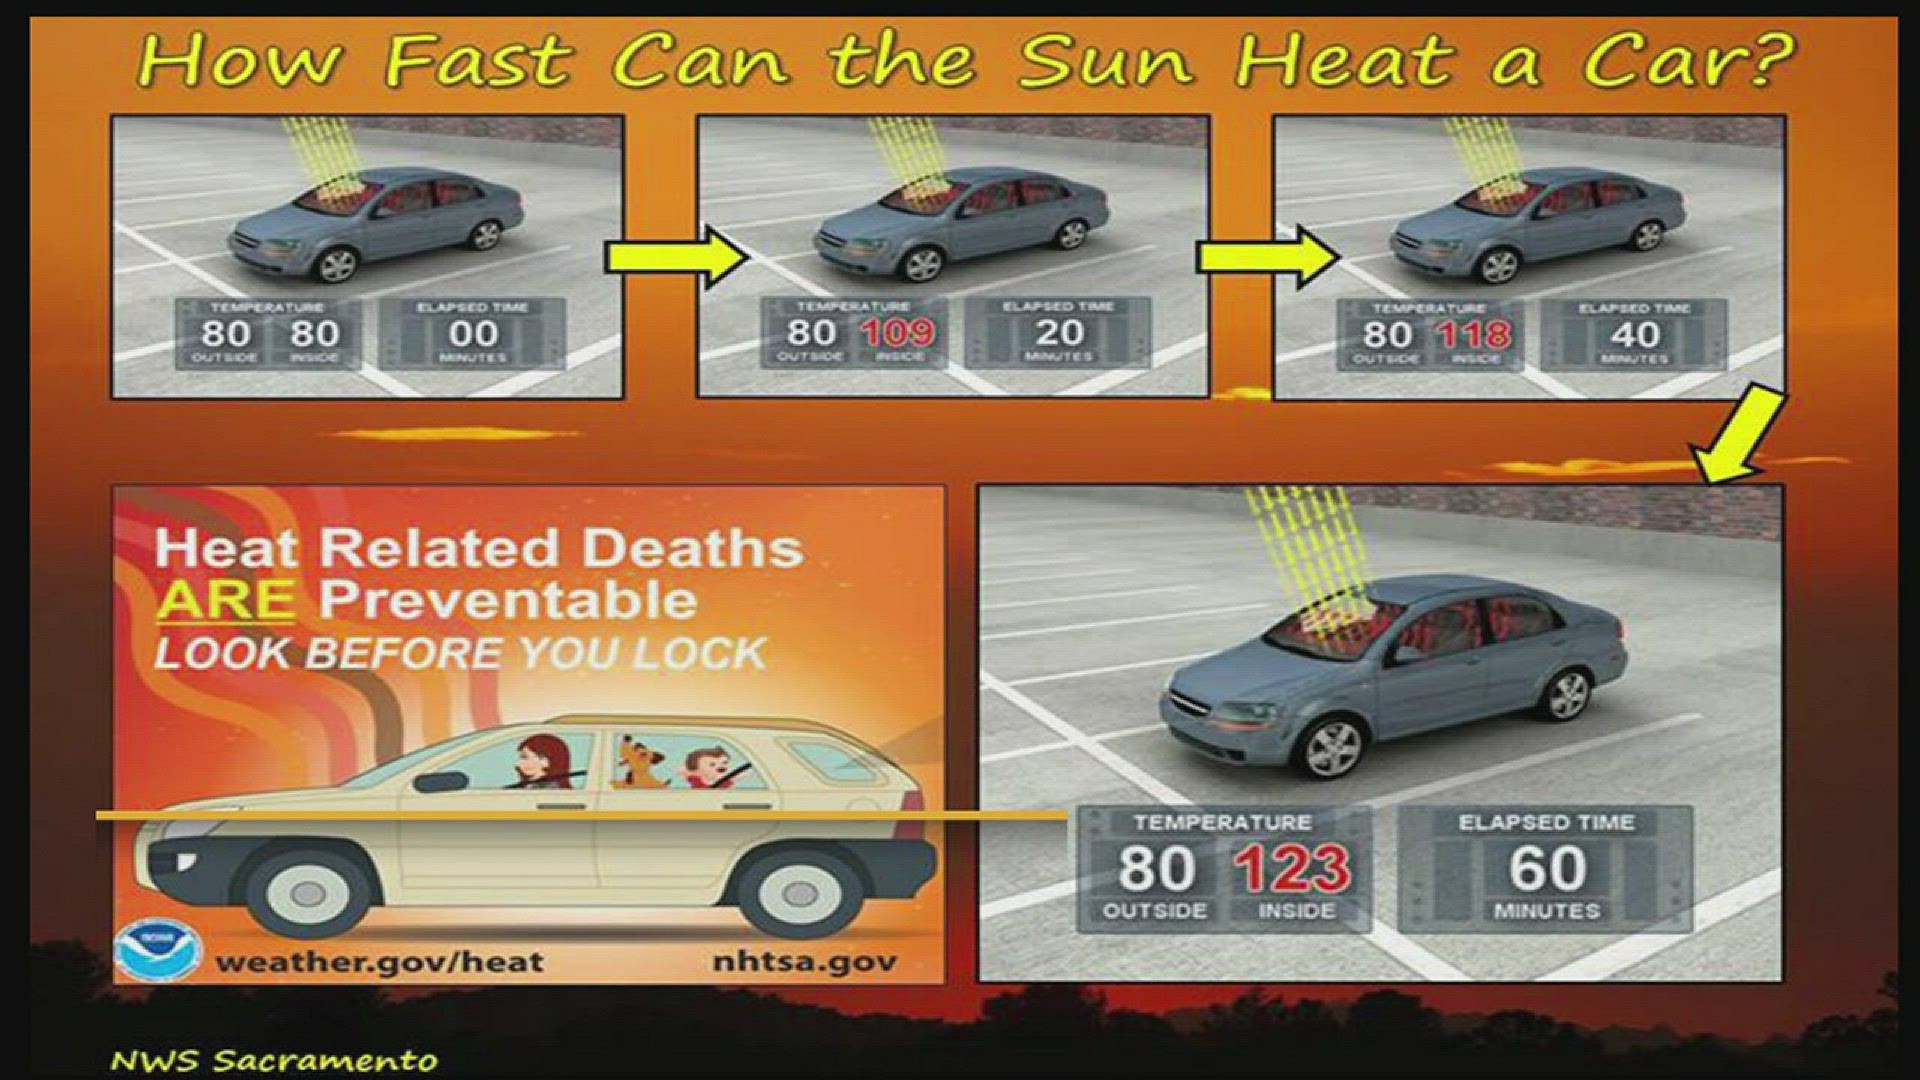 How To Heat A Car How fast can the sun heat a car? | kens5.com